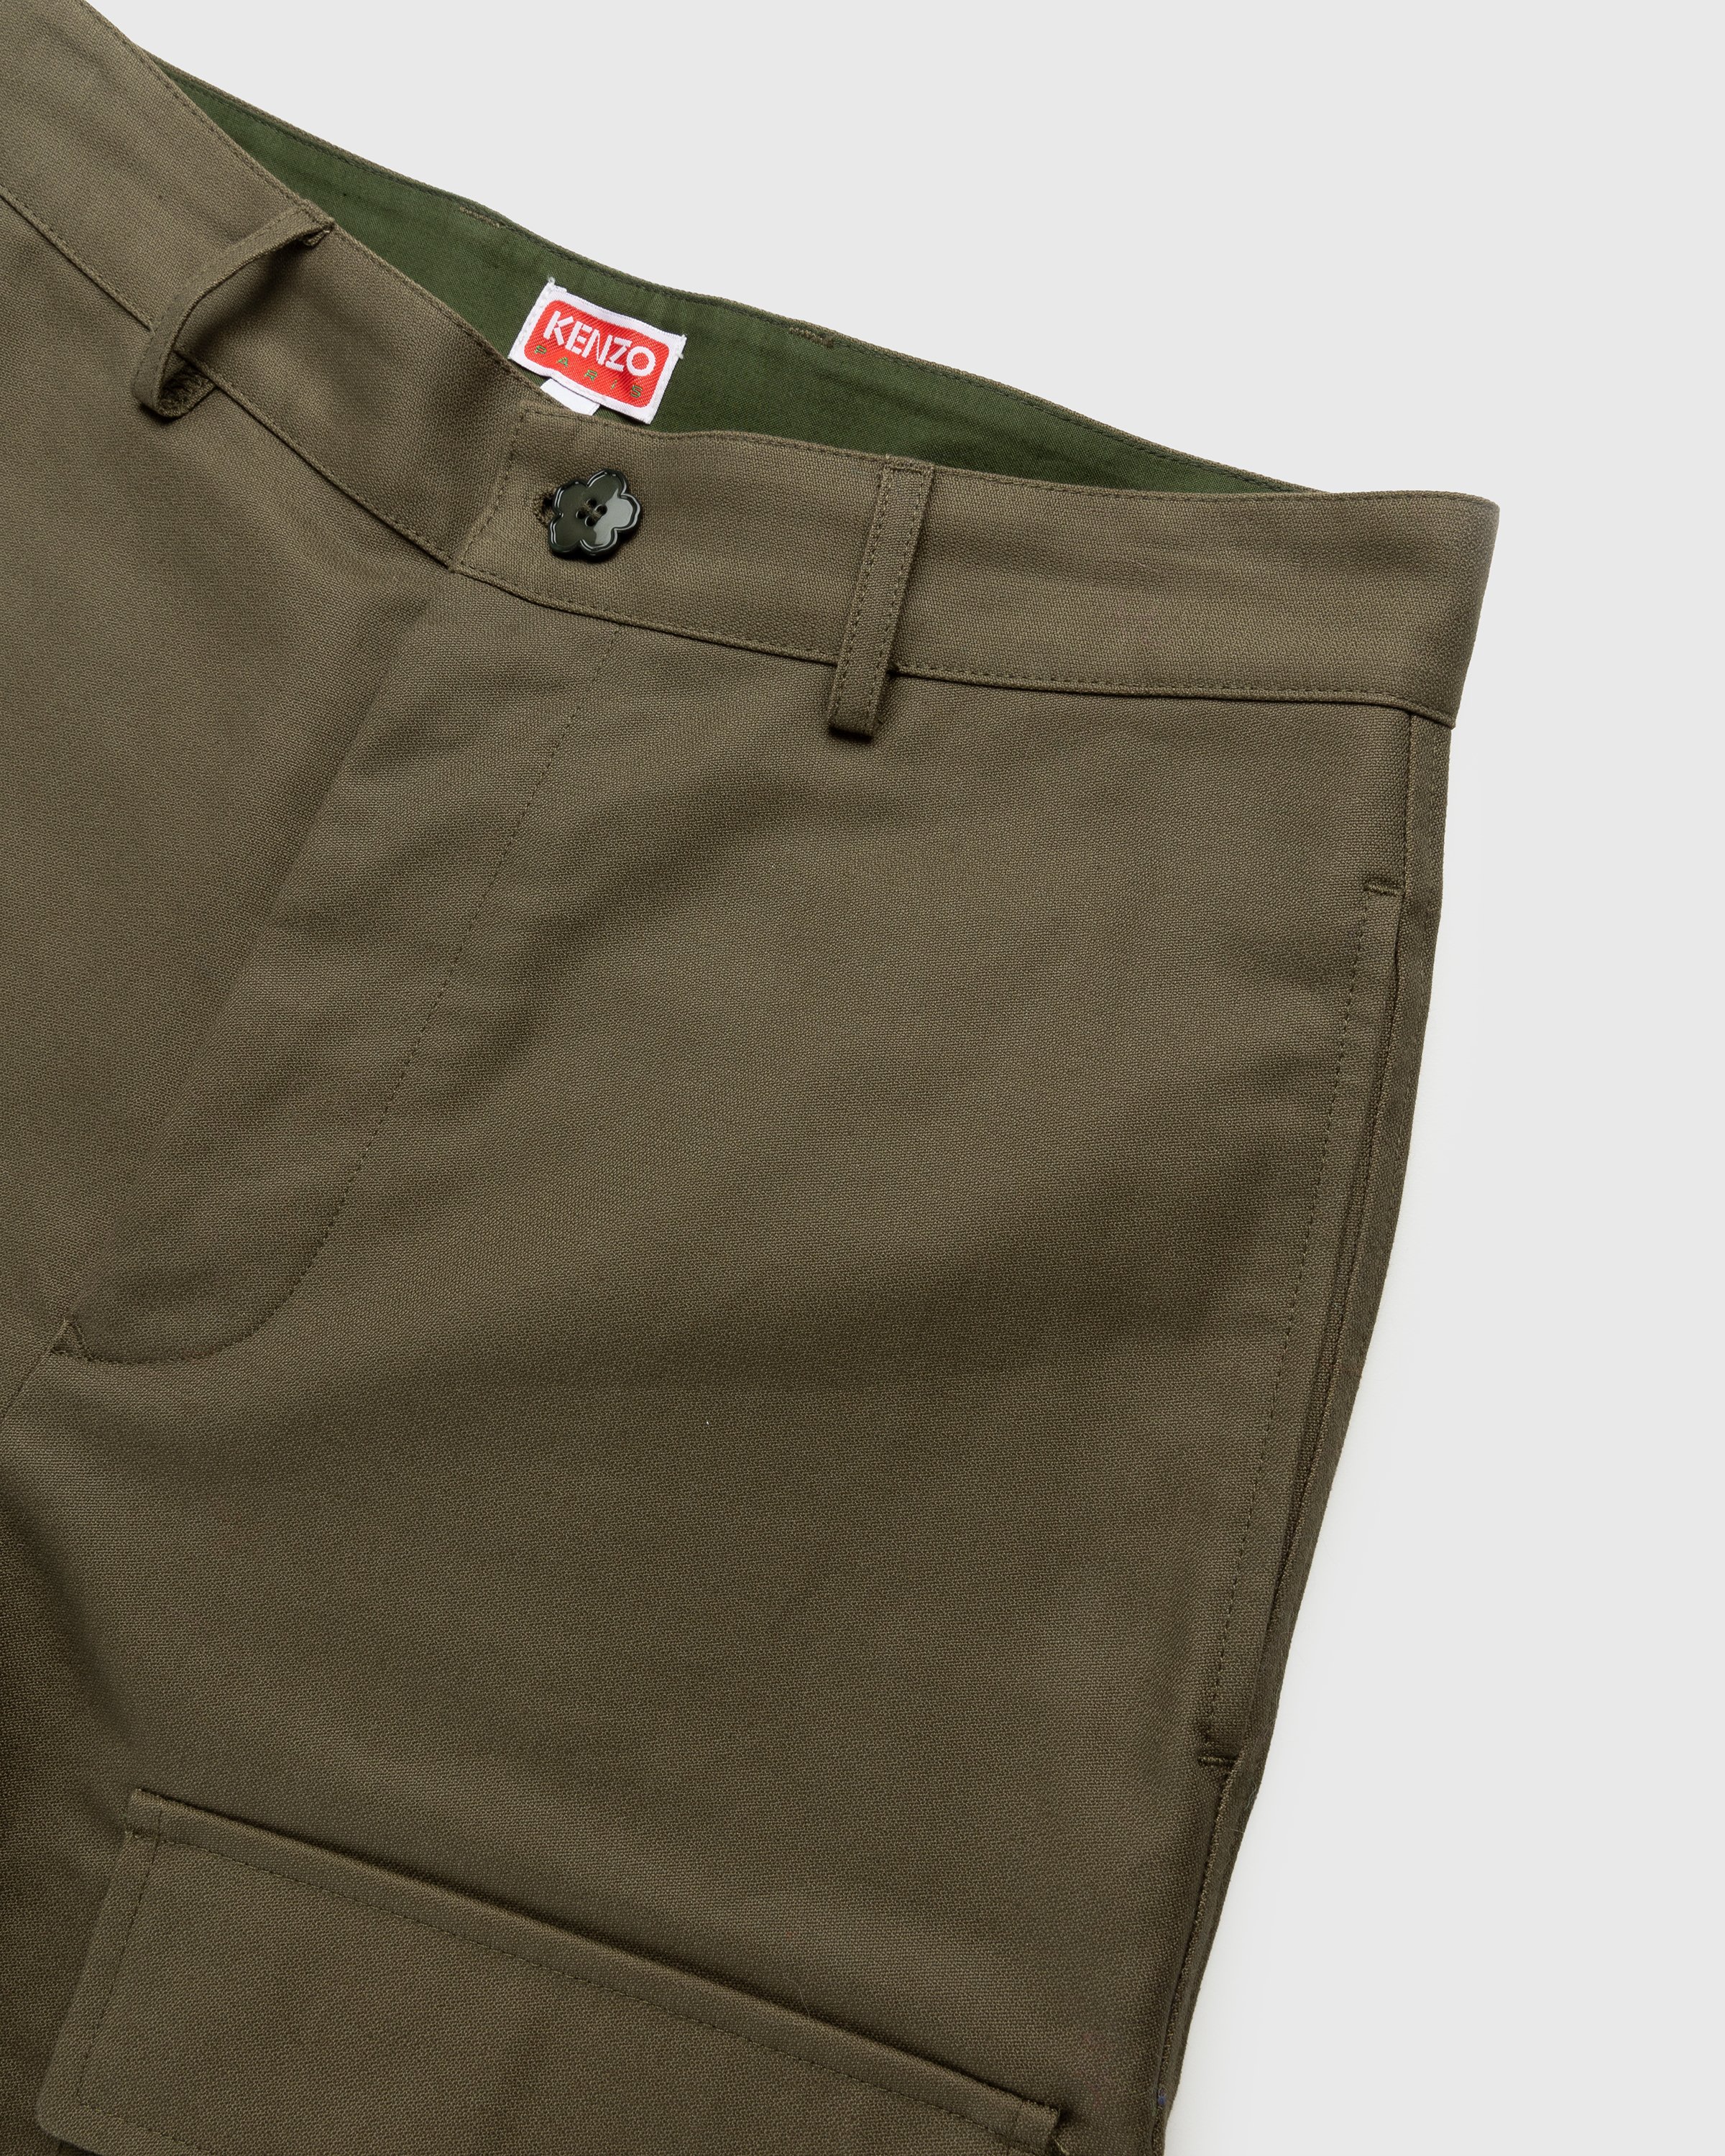 Kenzo - Tailored Pants Dark Khaki - Clothing - Green - Image 4